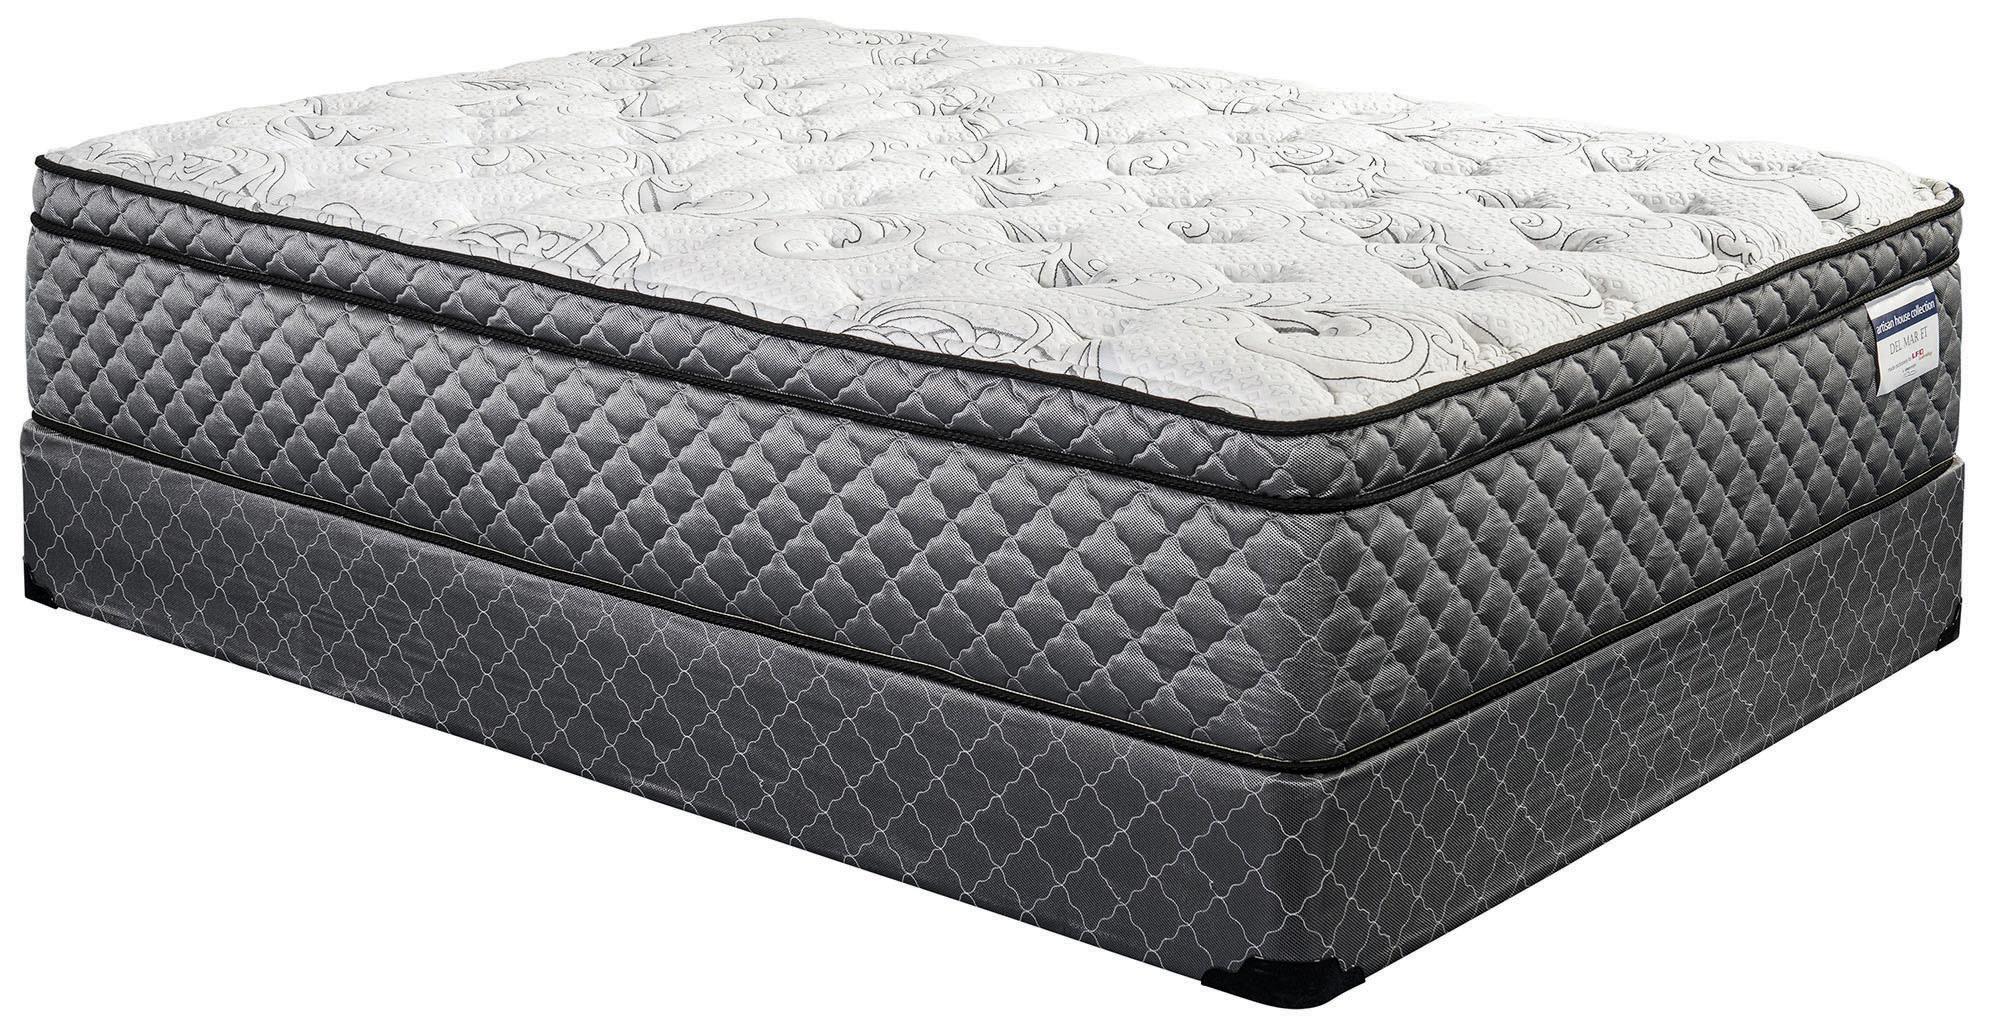 sleep design mattress houston tx